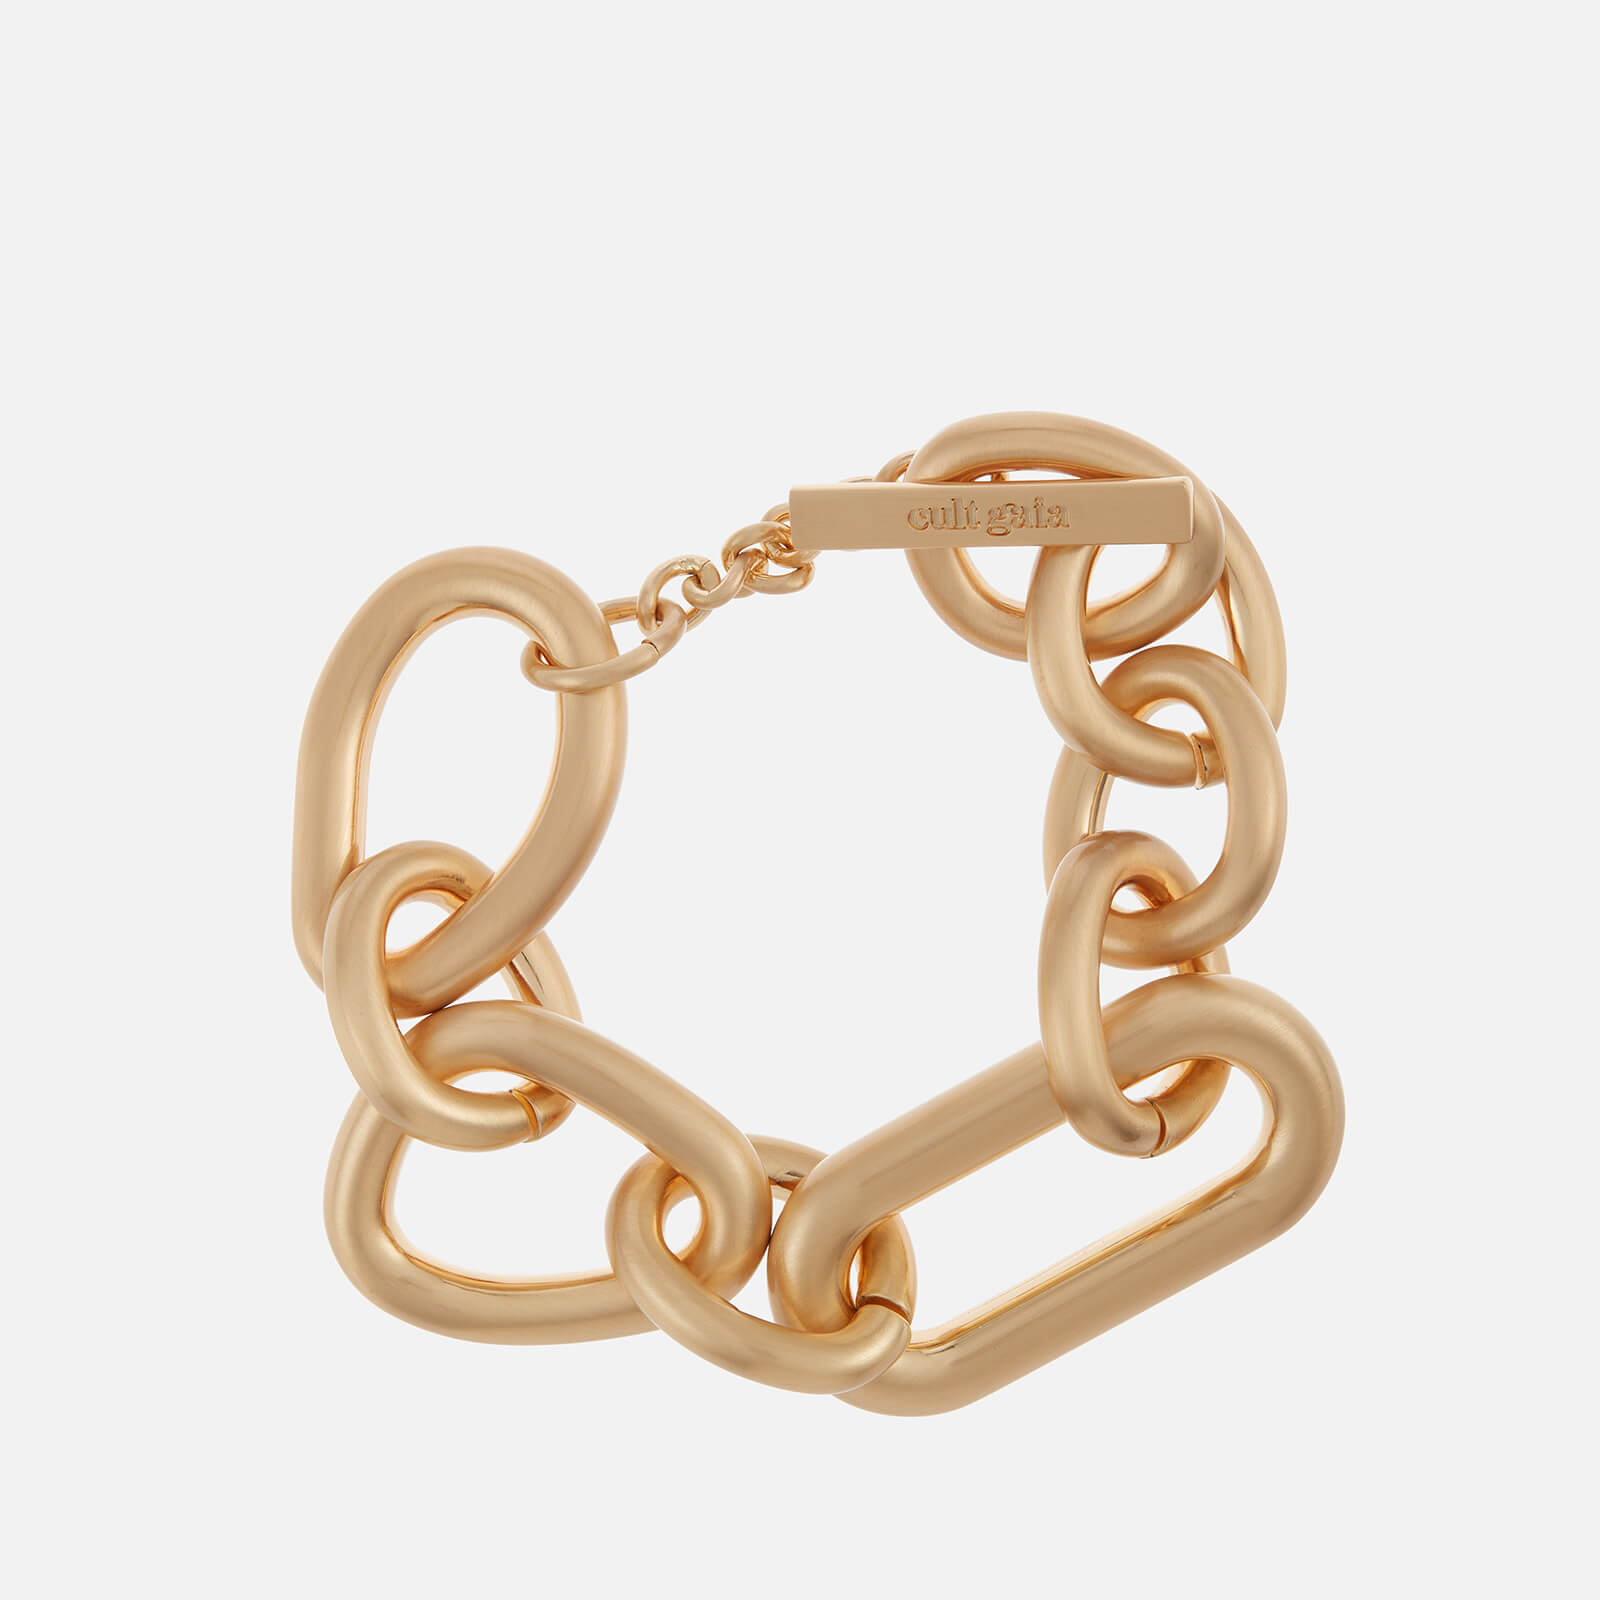 cult gaia reyes gold-tone chain bracelet